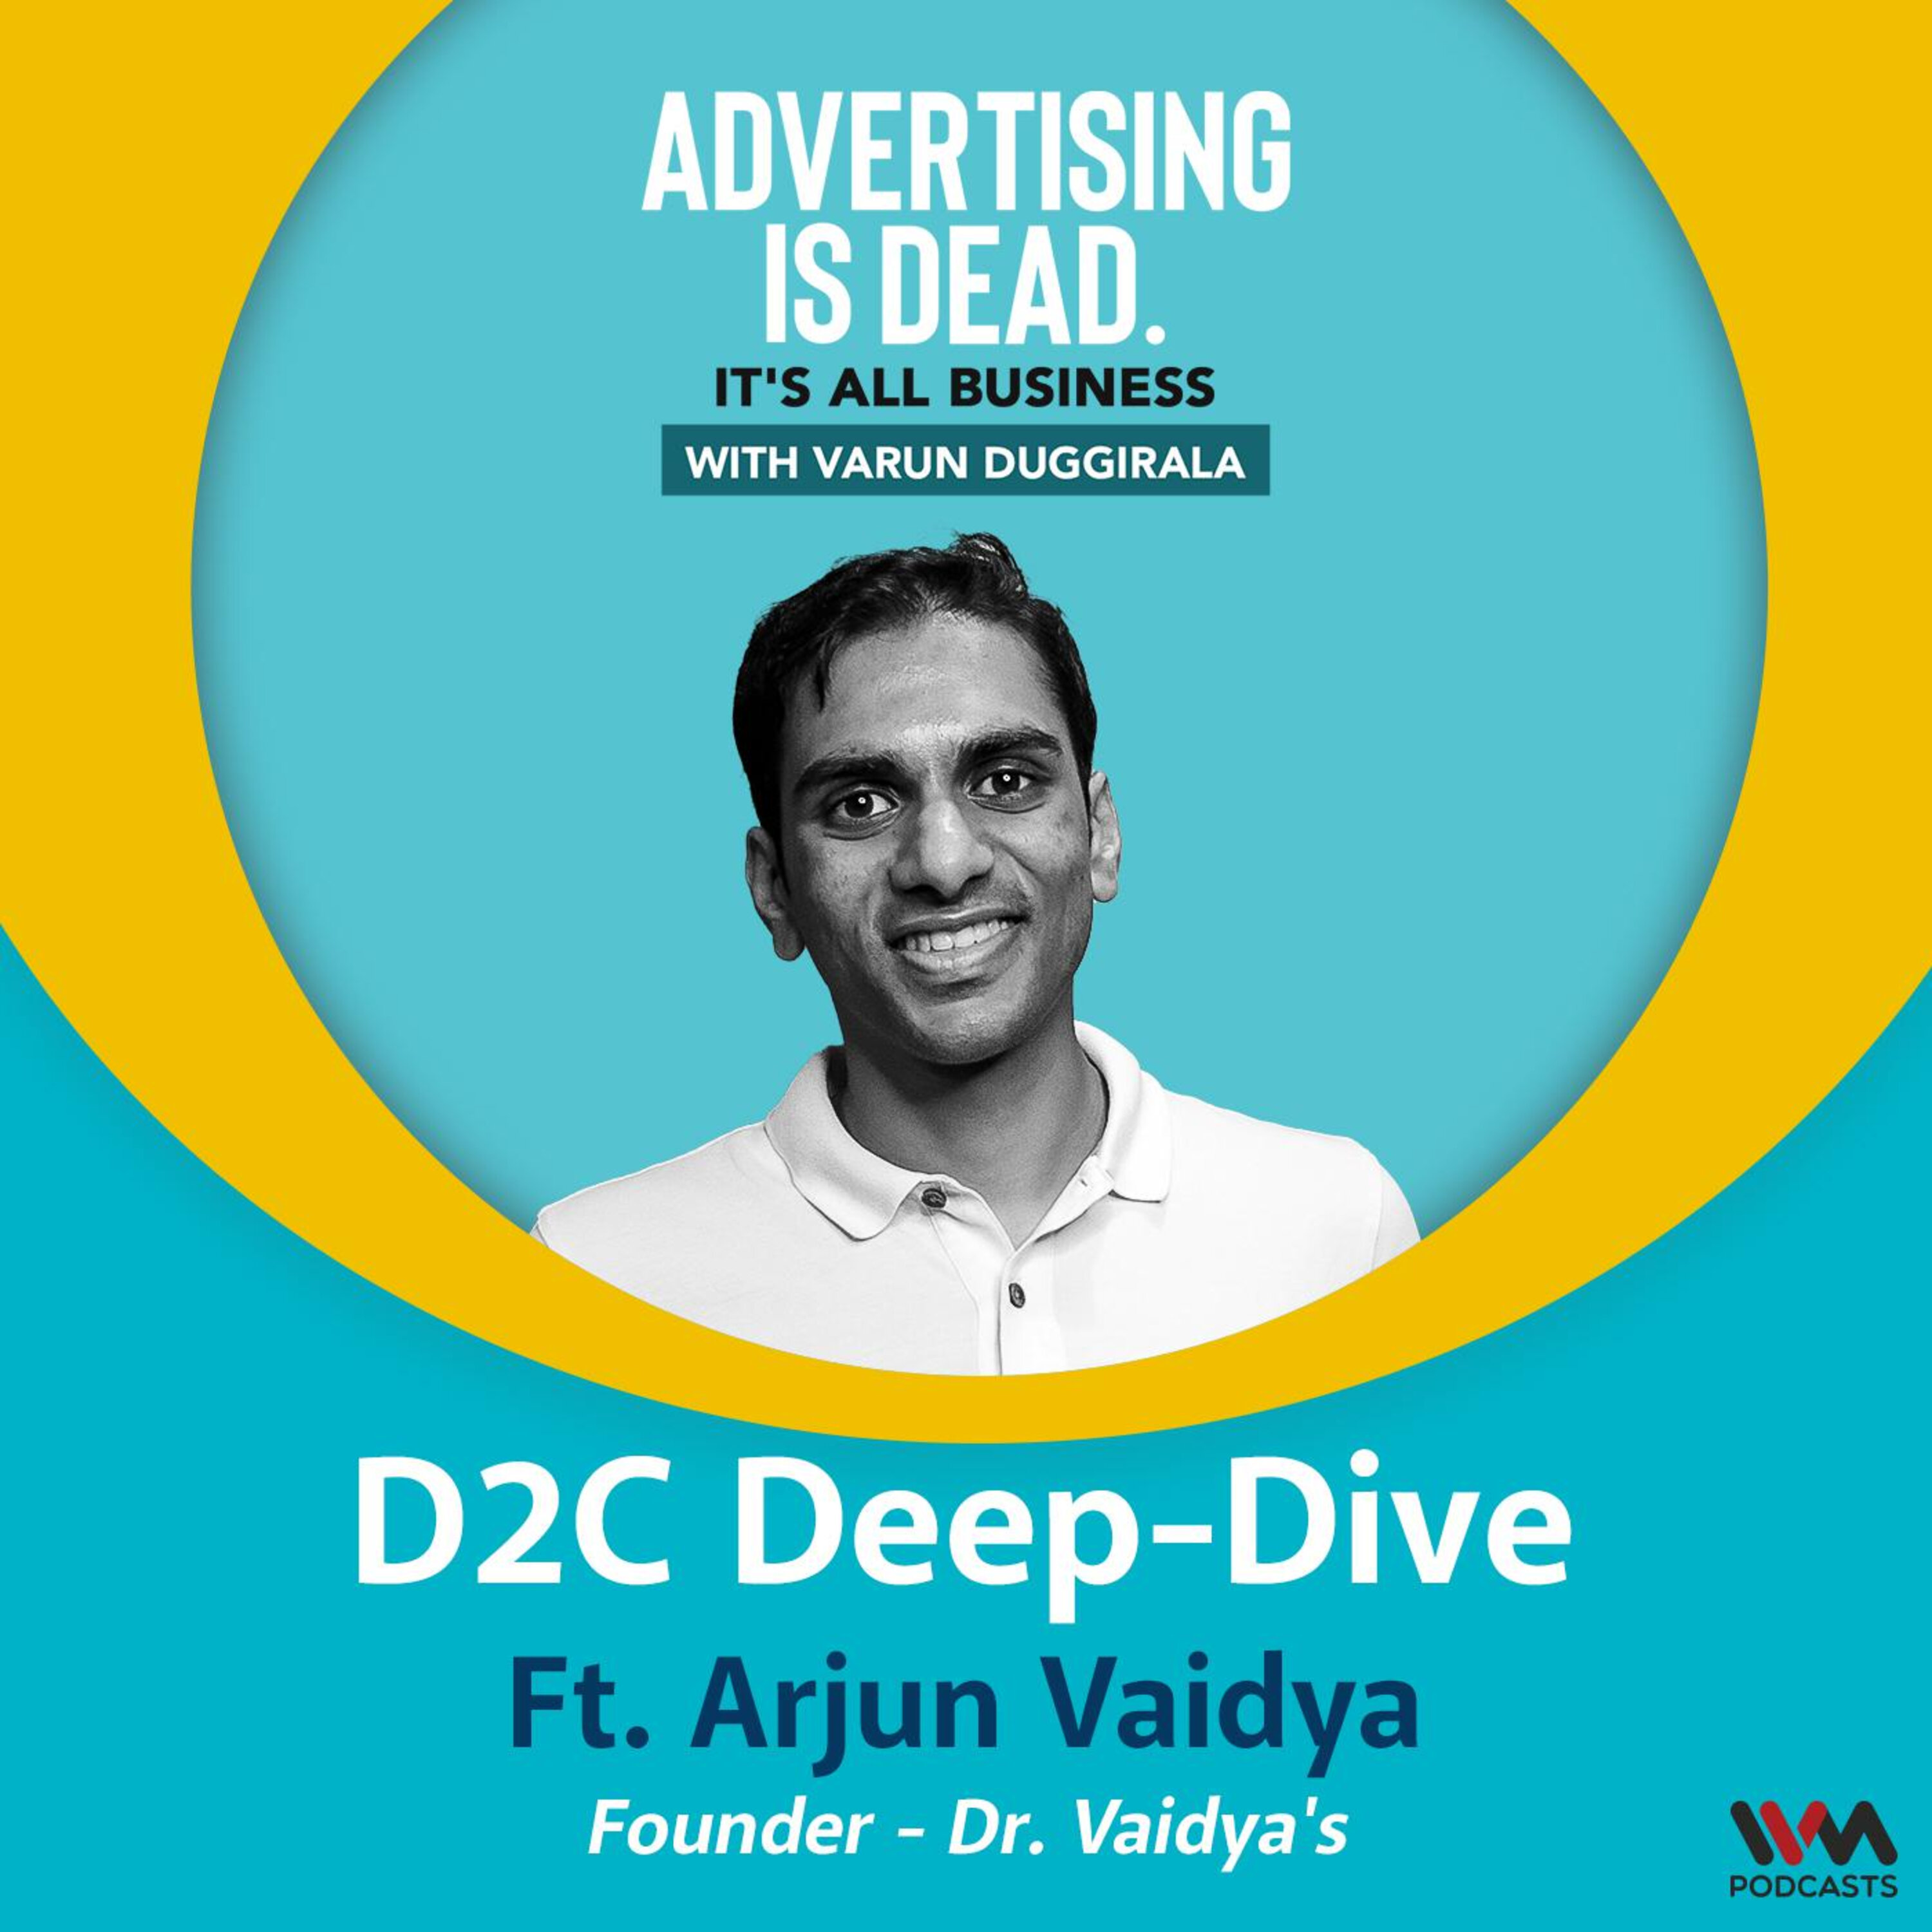 D2C Deep-Dive ft. Arjun Vaidya, Founder - Dr. Vaidya’s